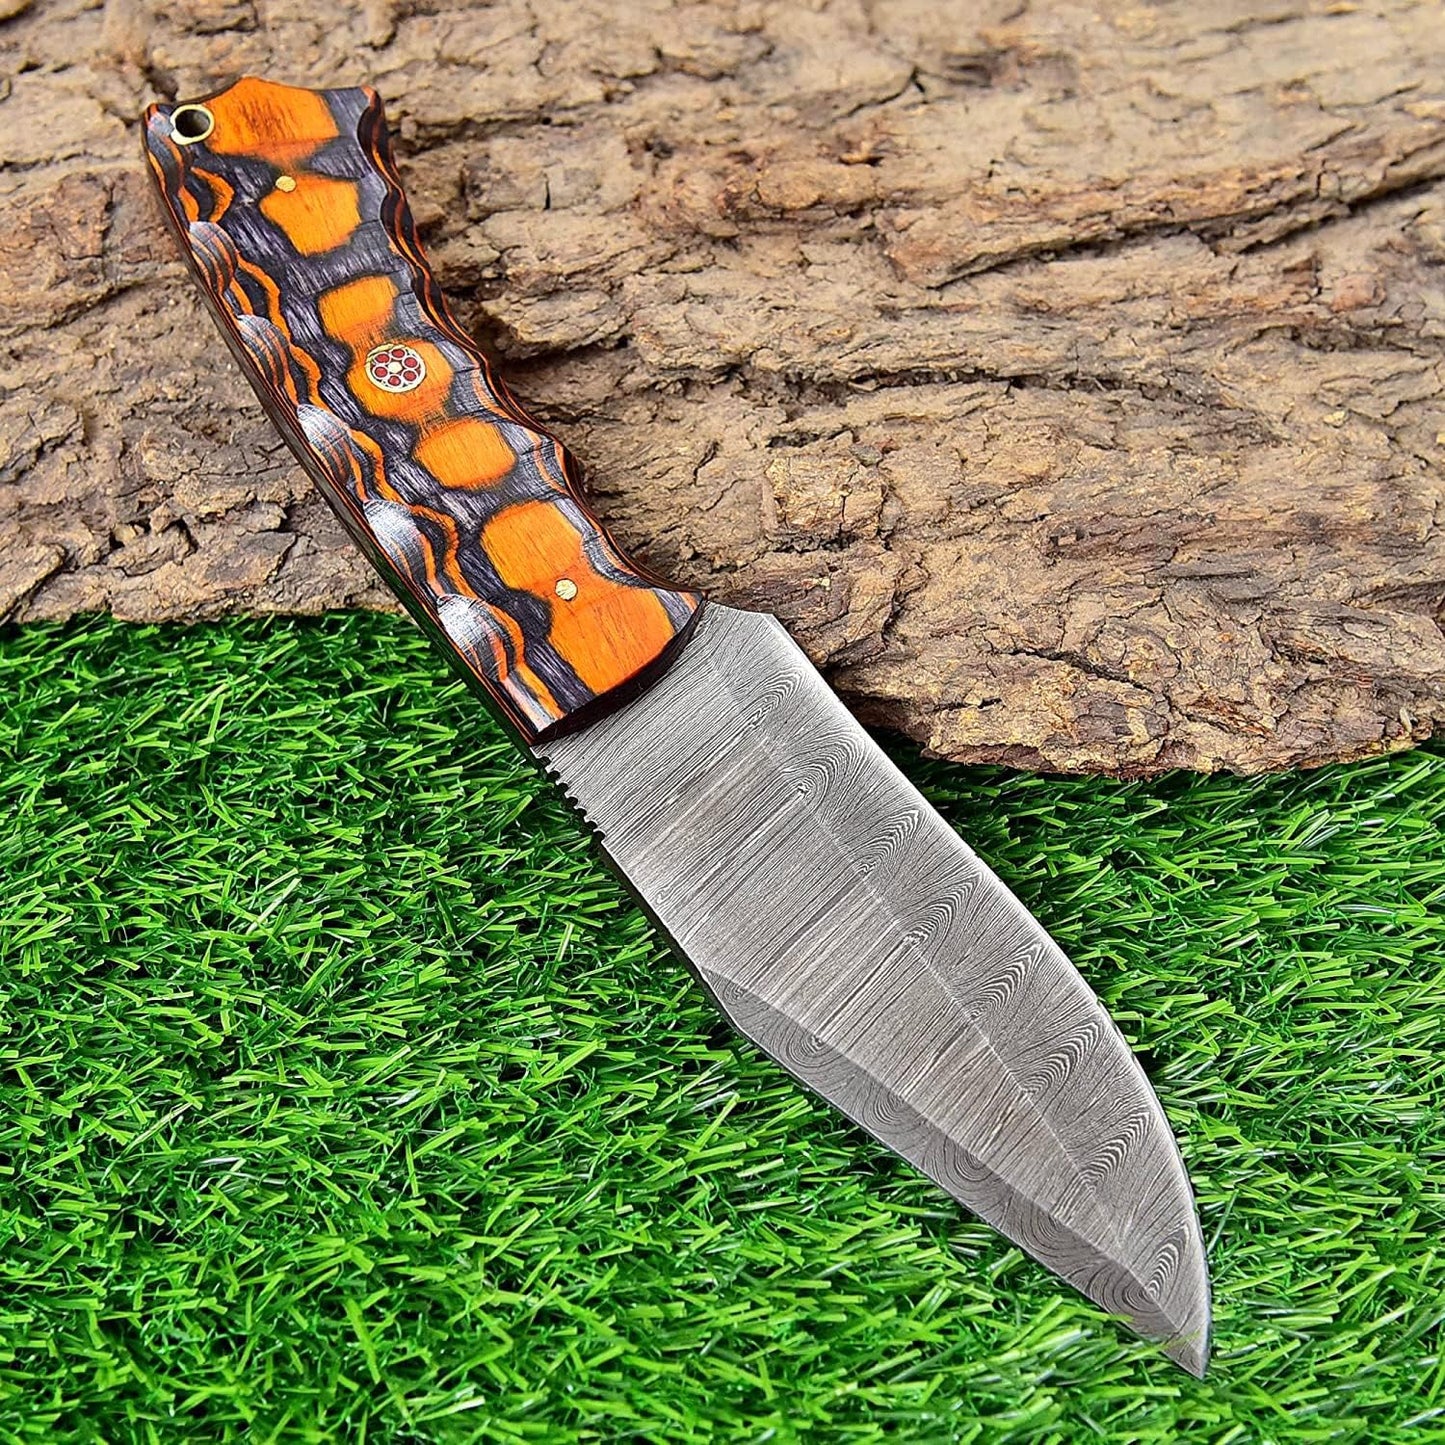 KD Hunting Knife 9" Damascus Steel Knife with Sheath